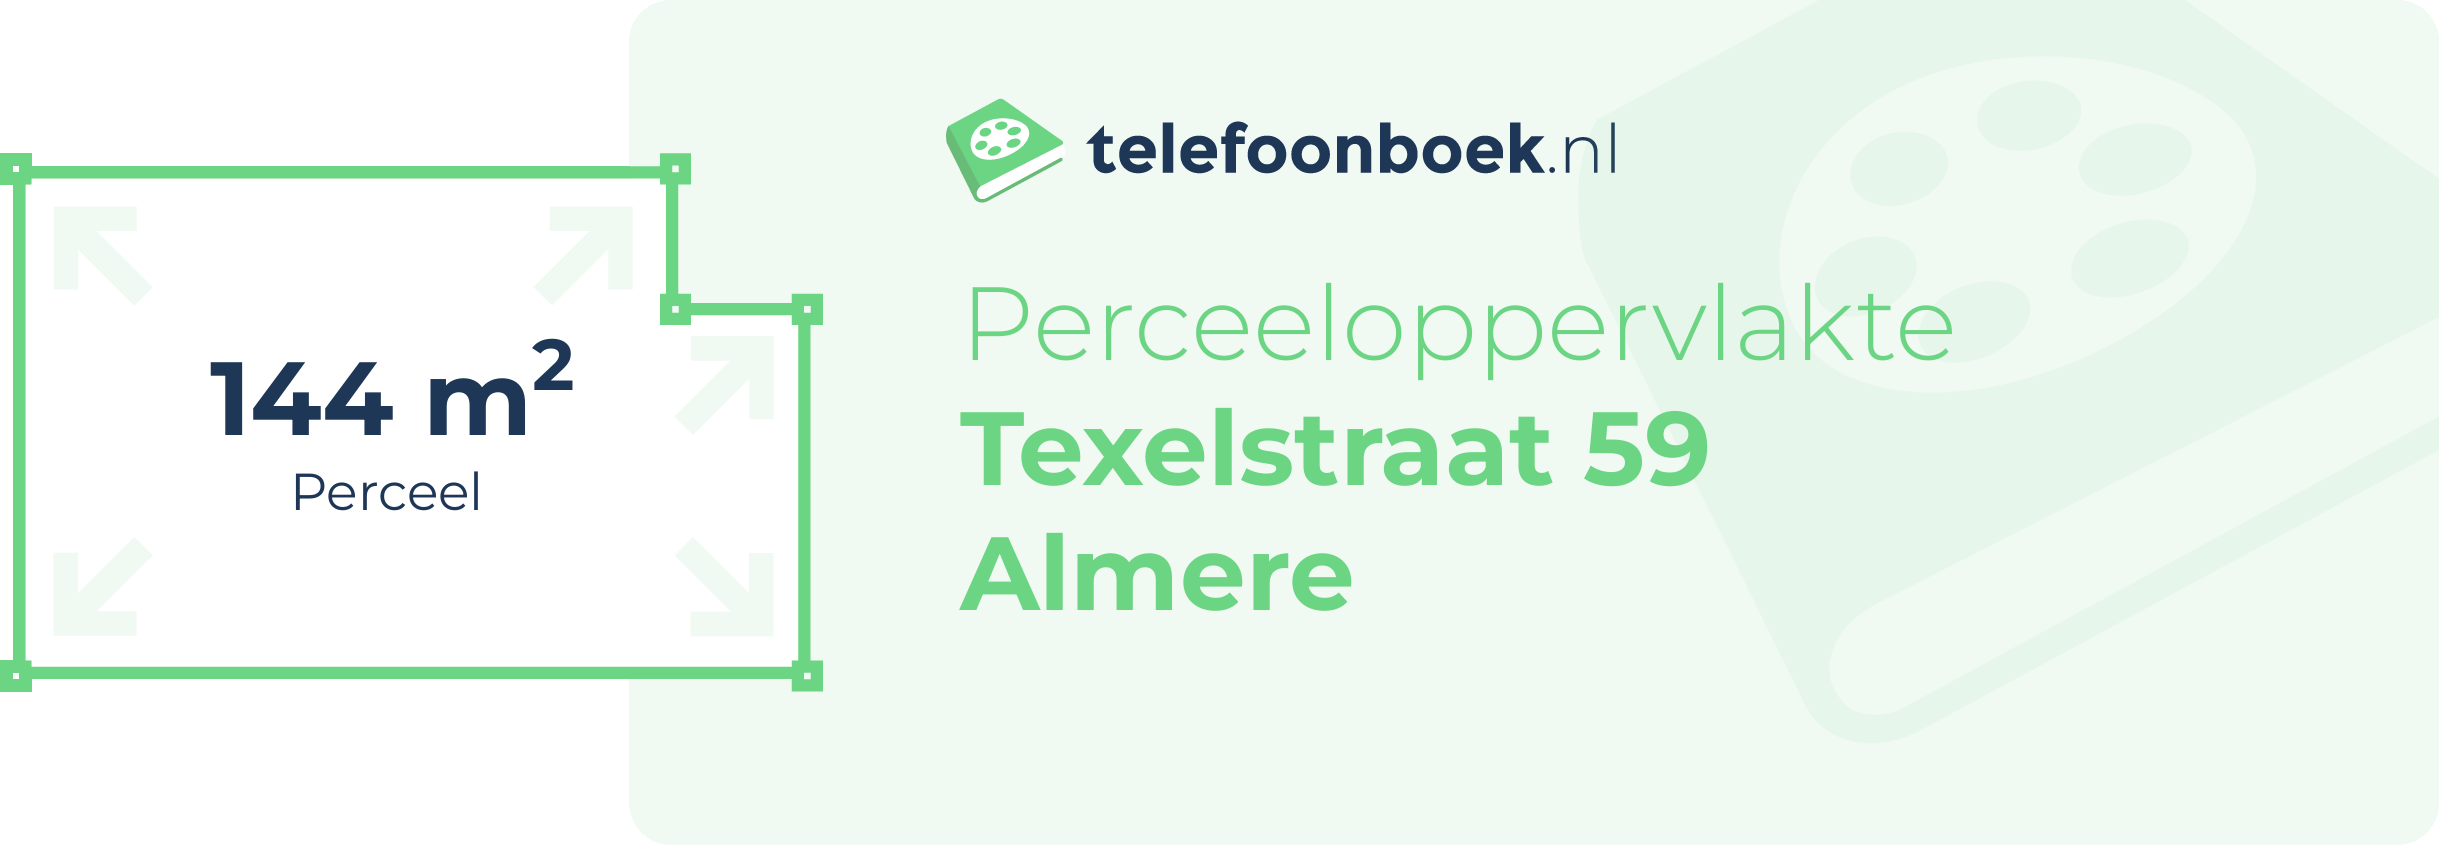 Perceeloppervlakte Texelstraat 59 Almere